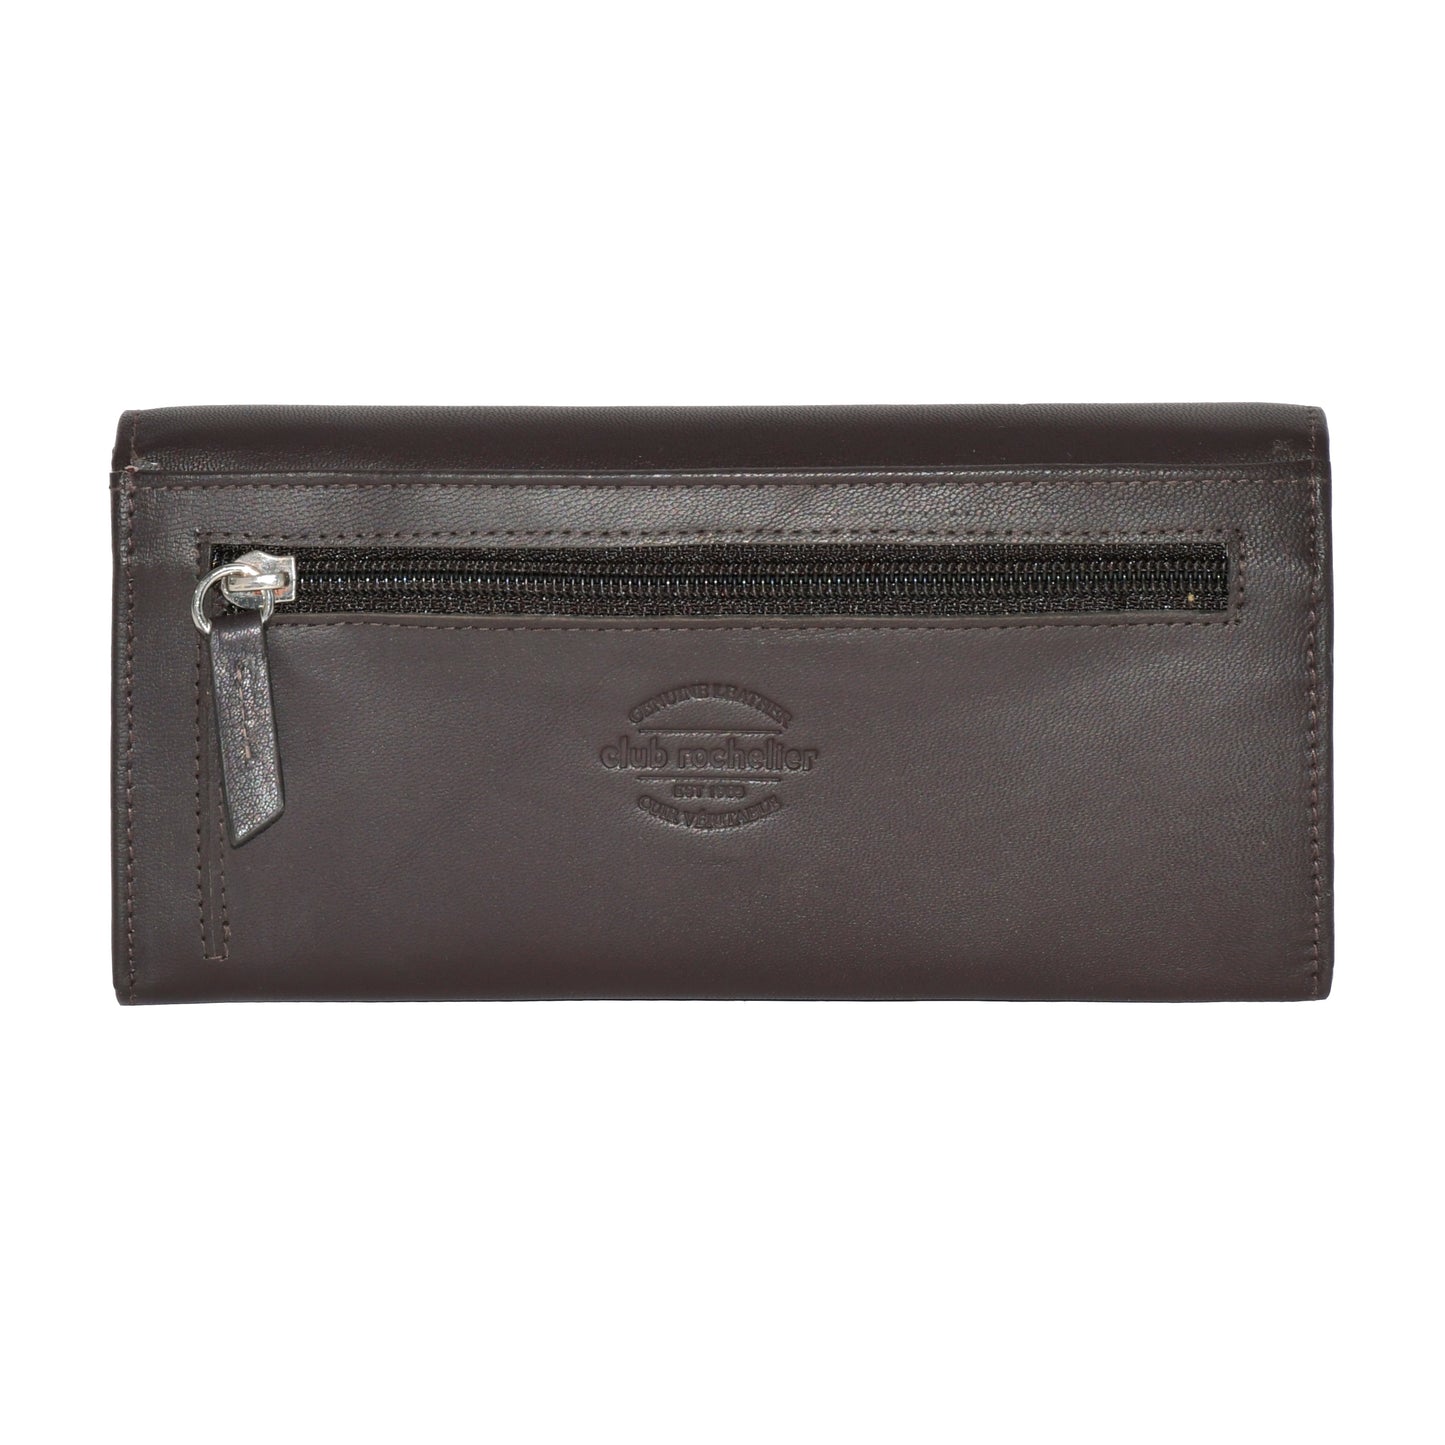 Ladies' Expander Clutch Wallet